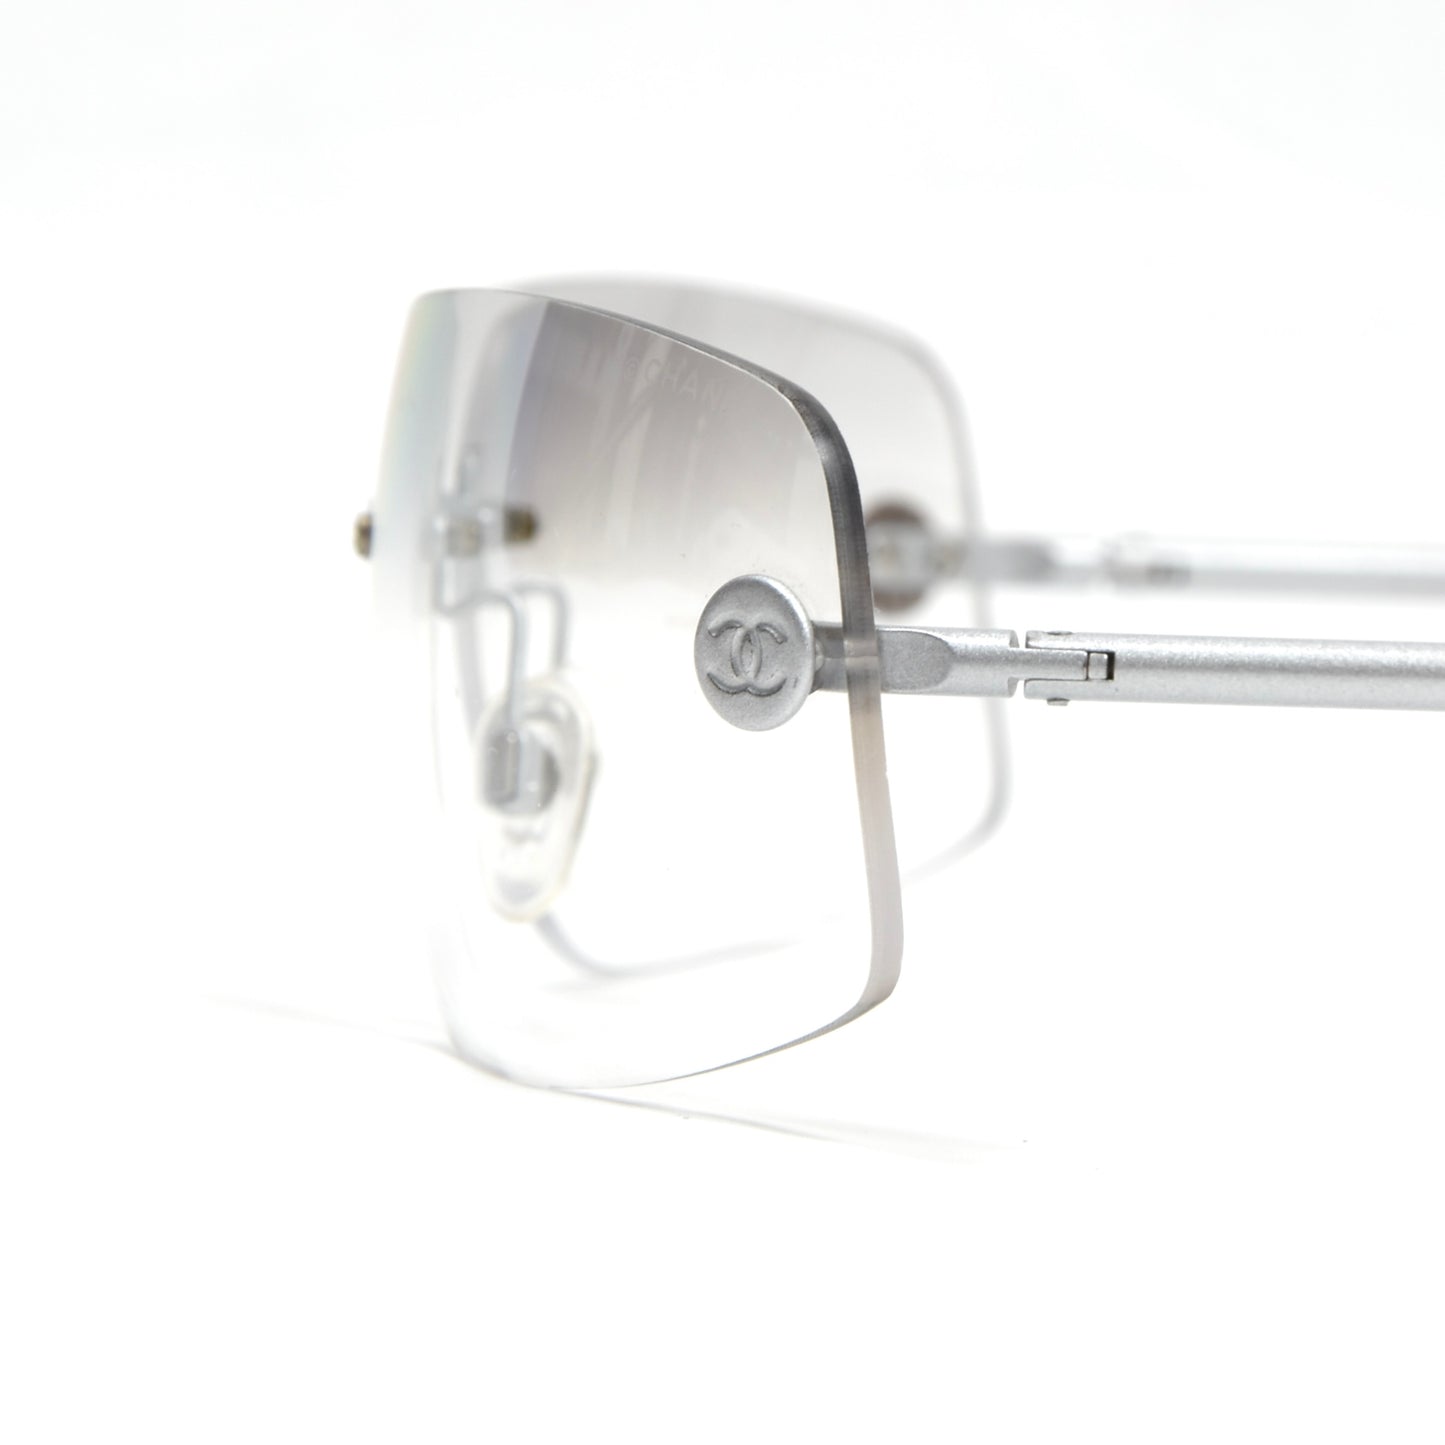 Chanel Sonnenbrillen Modell 4035 - Rahmenlos